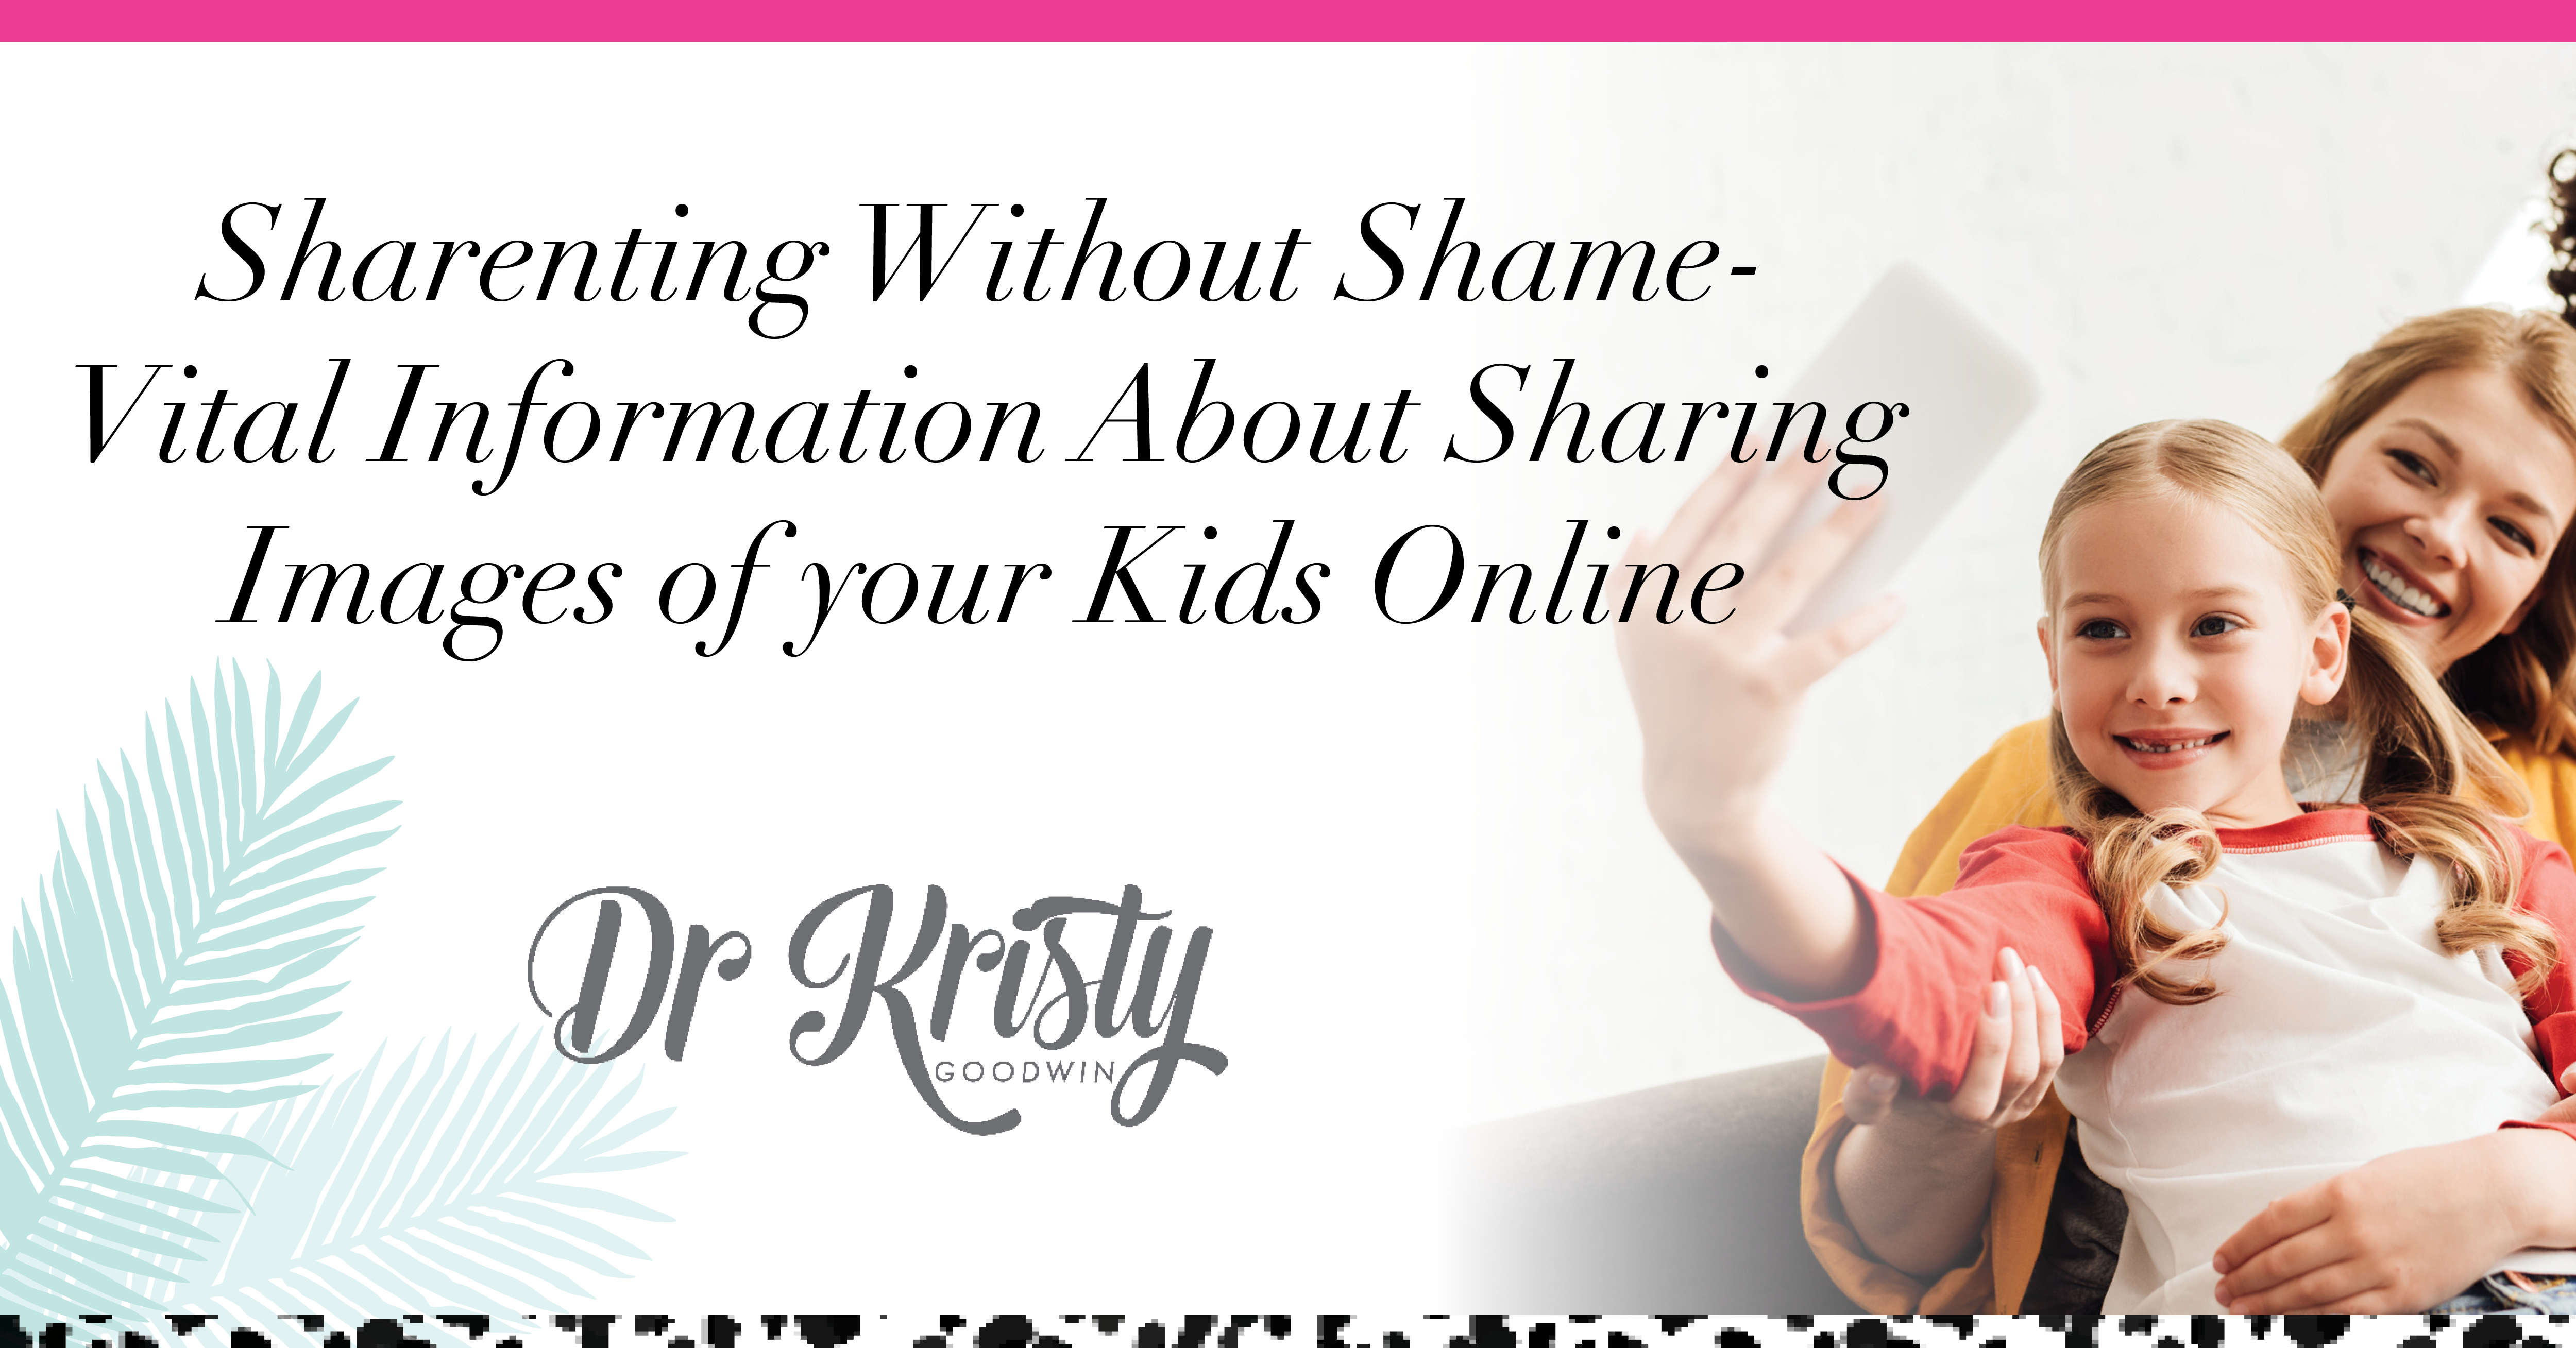 Dr Kristy Goodwin– Sharenting